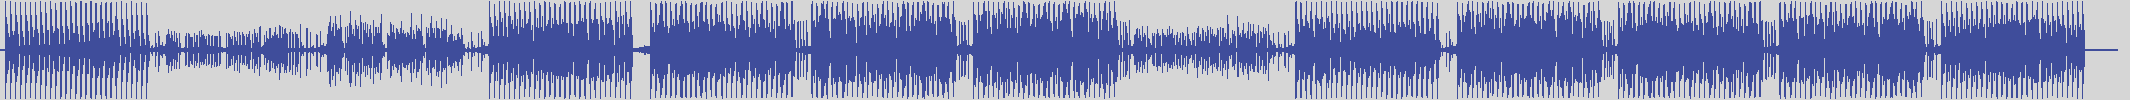 nf_boyz_records [NFY045] Anthony Maserati - Boom [Soul Island Mix] audio wave form